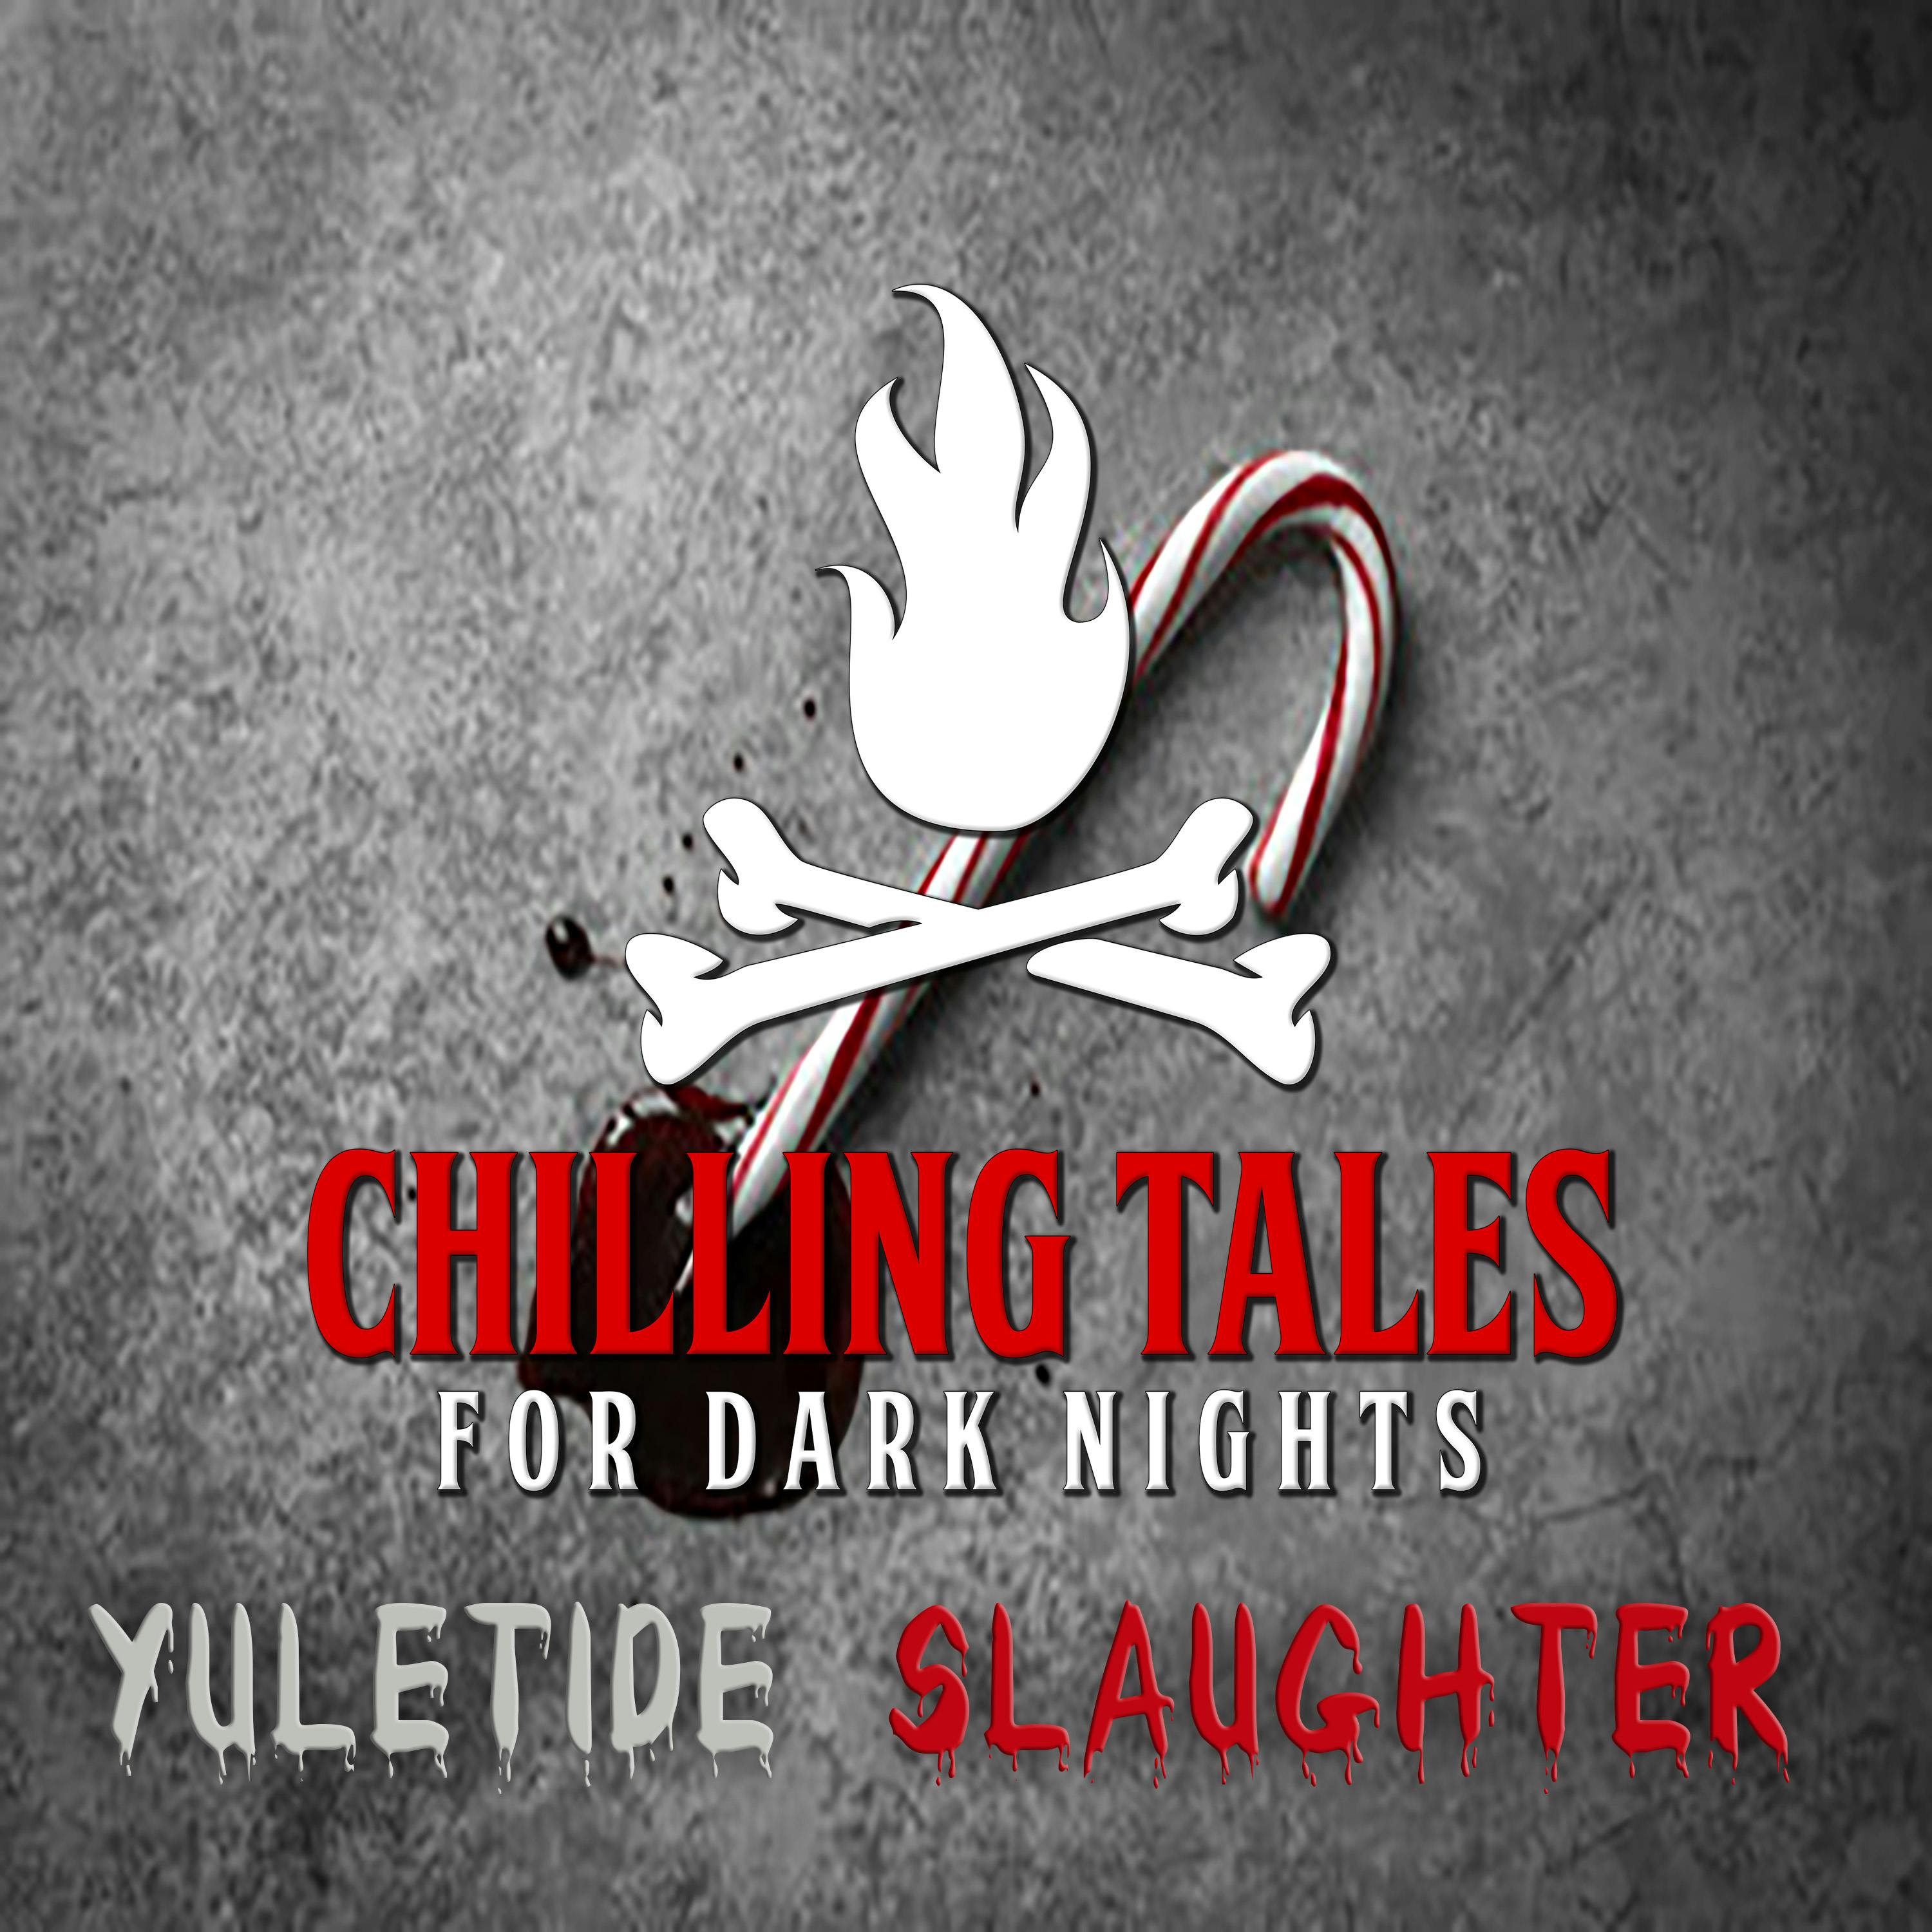 168: Yuletide Slaughter - Chilling Tales for Dark Nights